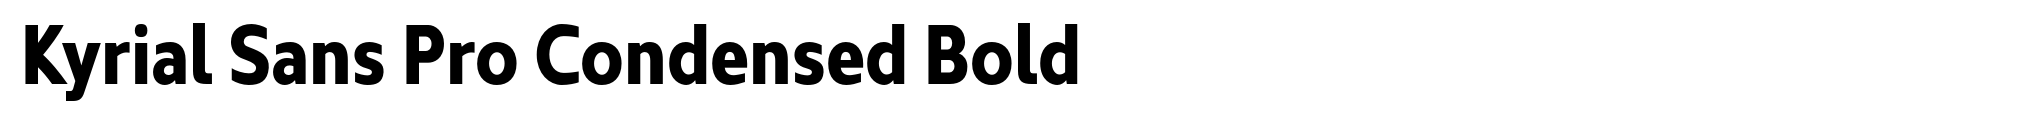 Kyrial Sans Pro Condensed Bold image